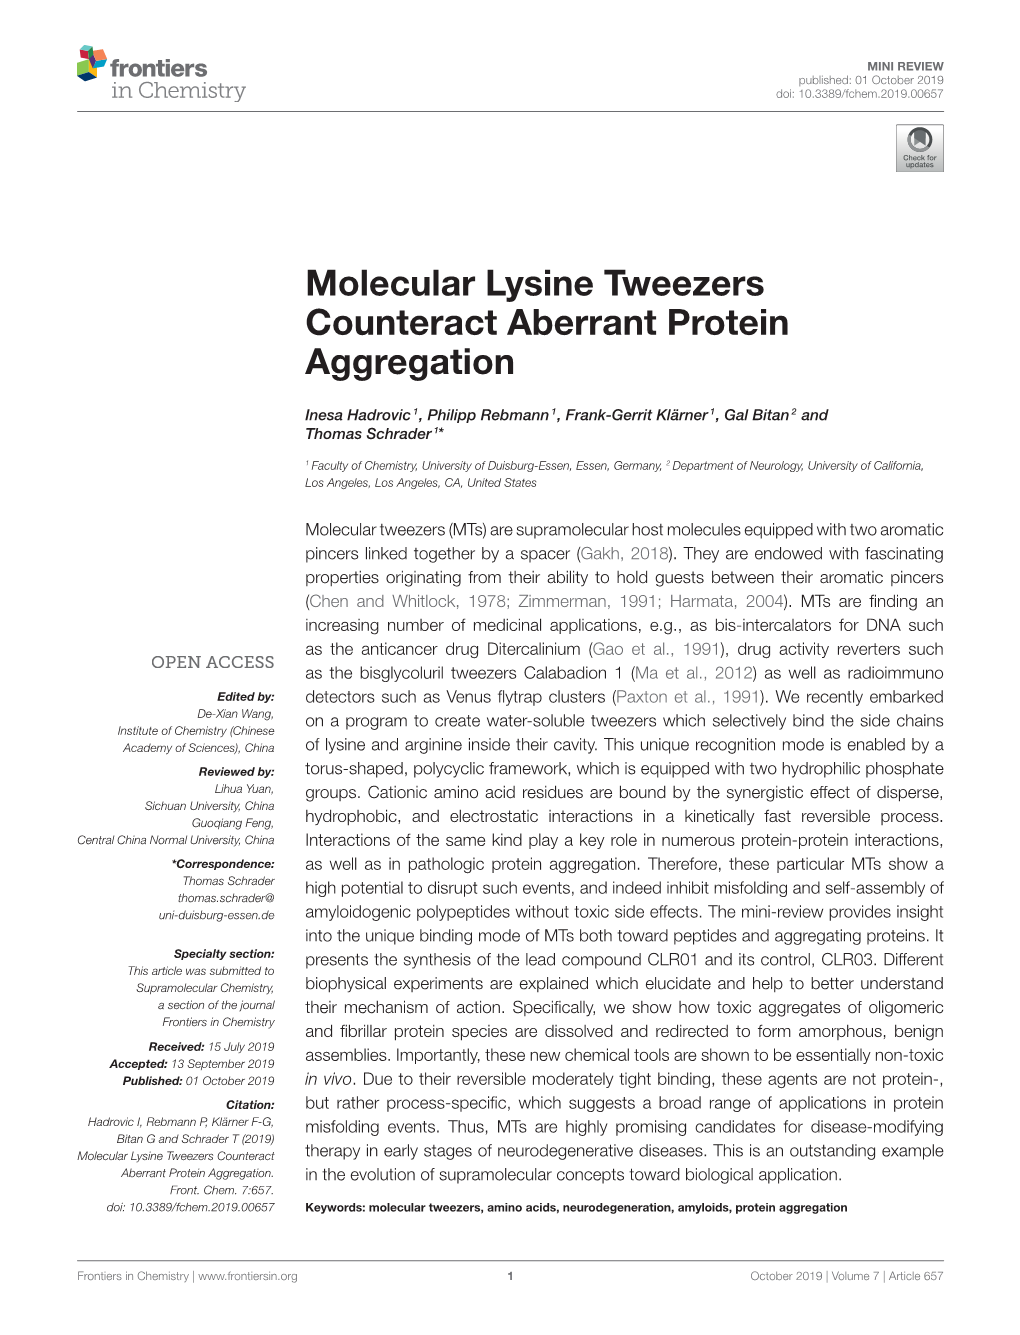 Molecular Lysine Tweezers Counteract Aberrant Protein Aggregation